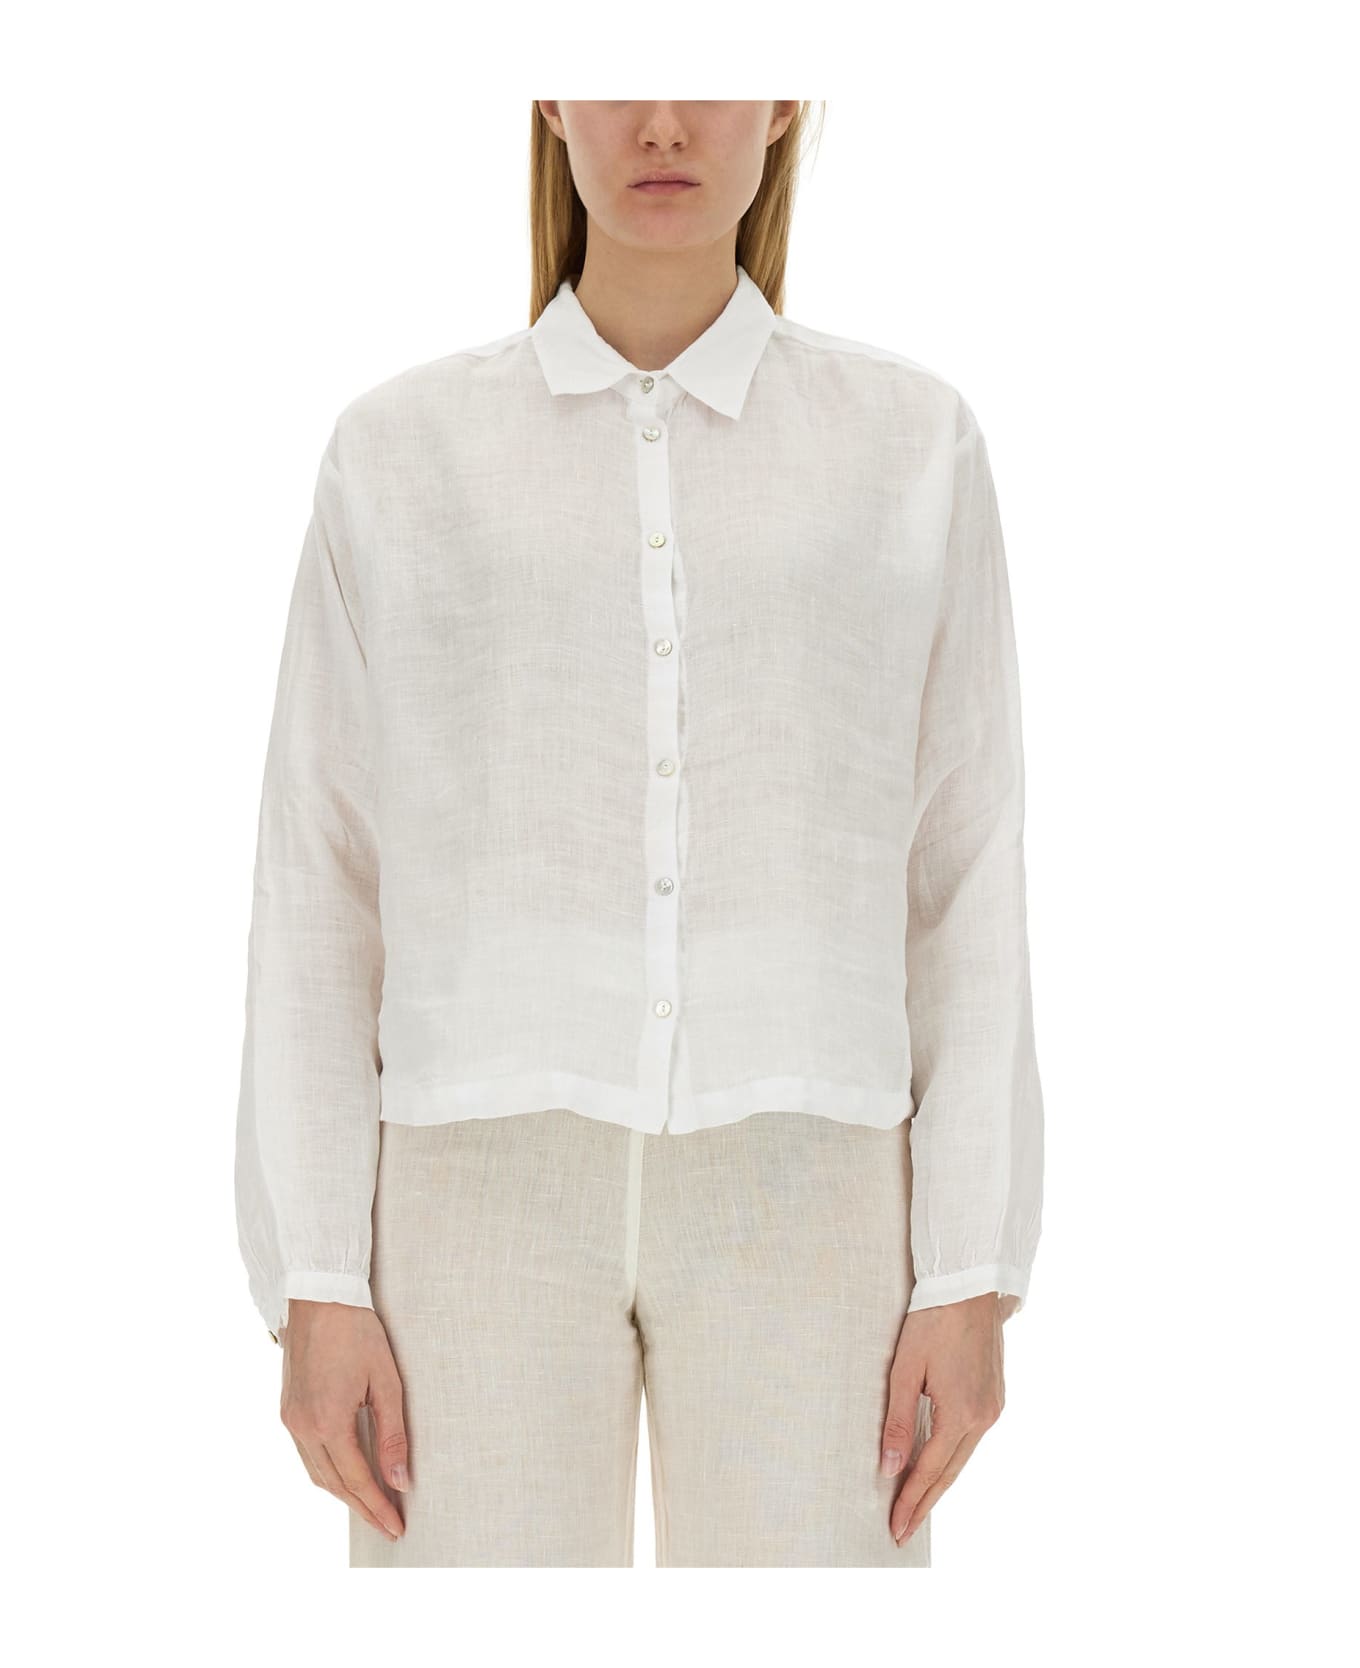 120% Lino Linen Shirt - Bianco